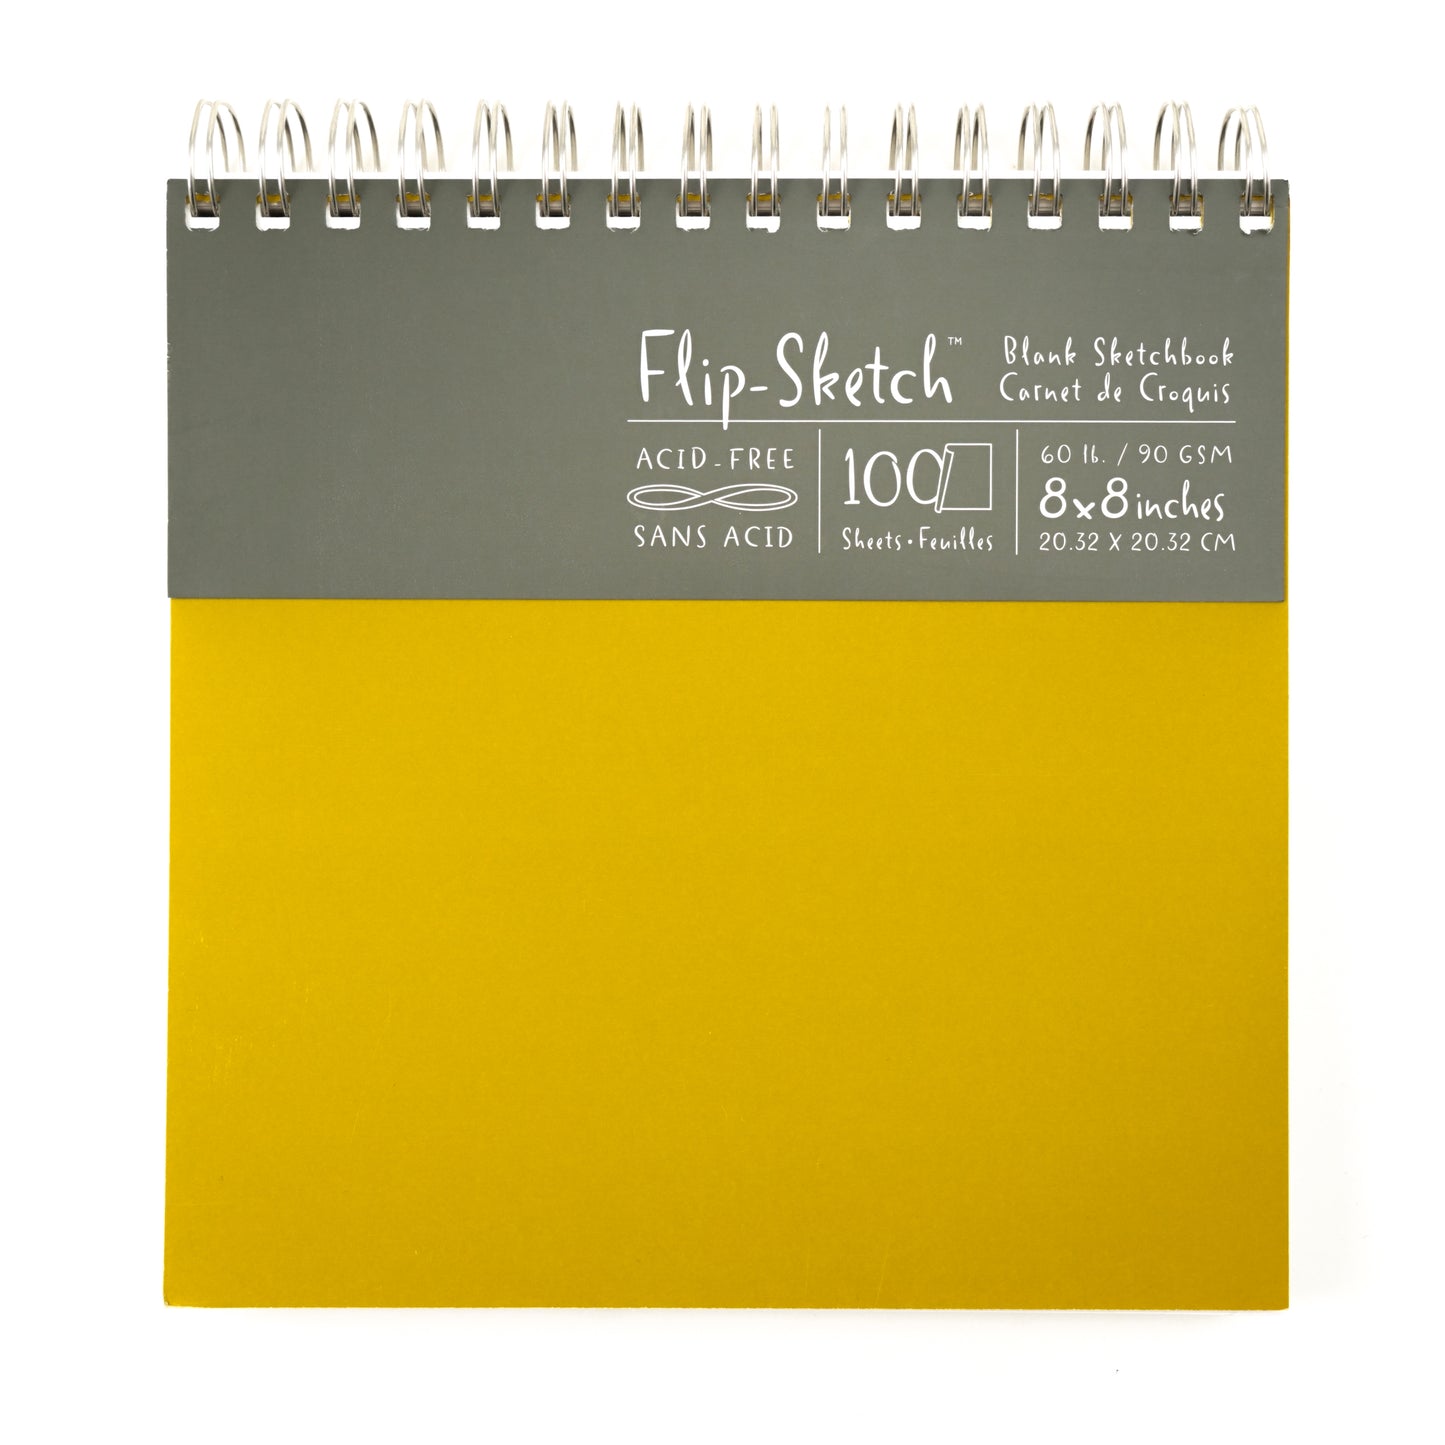 Flip Sketch 100 Page Acid-Free Sketchbooks - 8 x 8 inches - Butternut Yellow by Global Art - K. A. Artist Shop